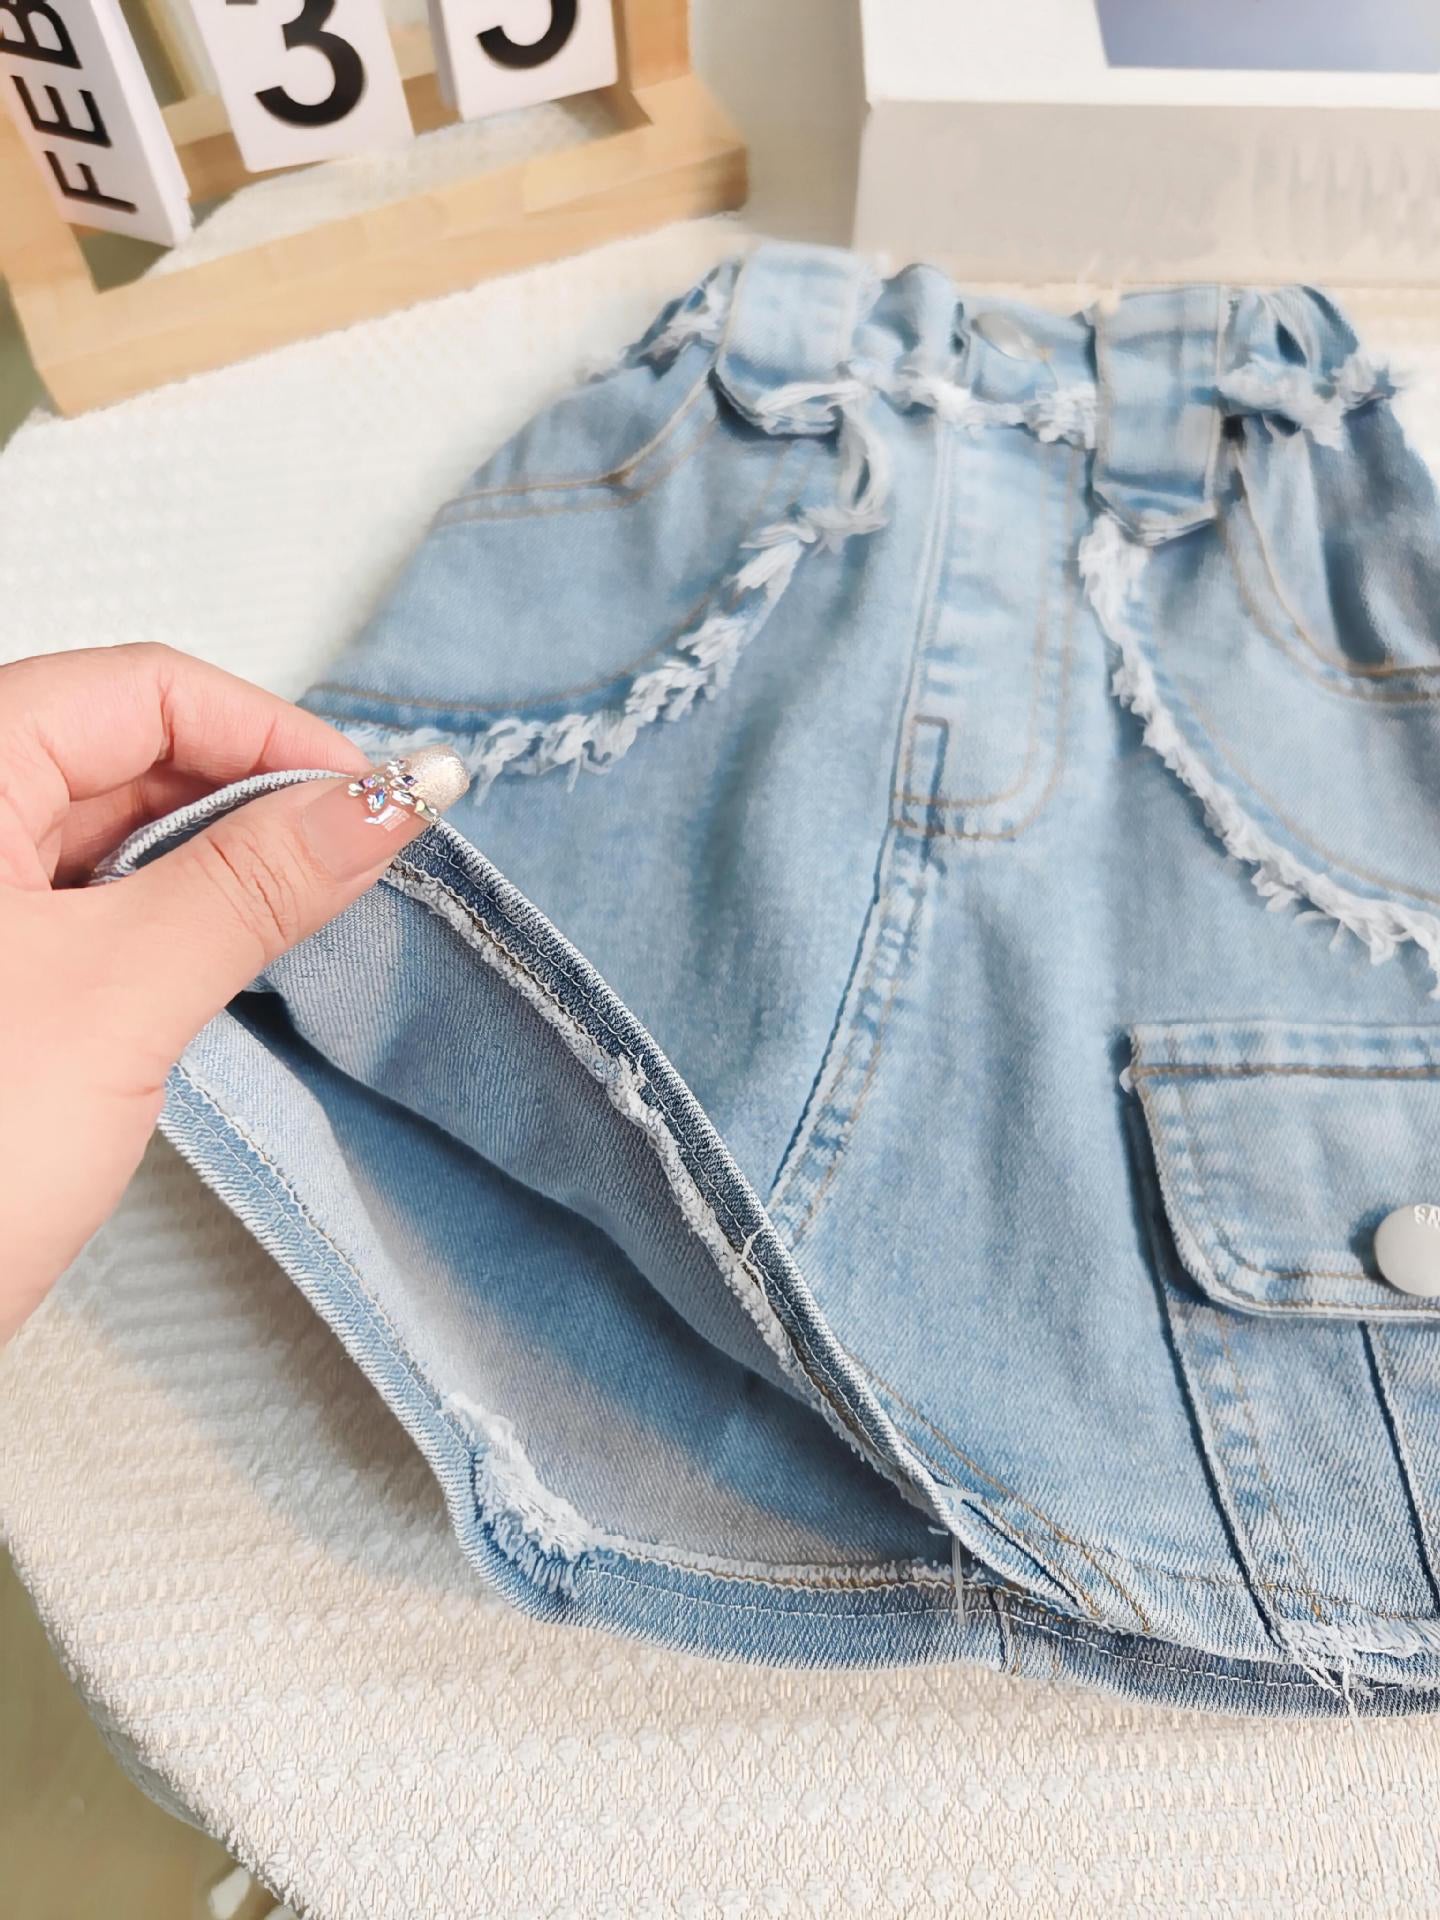 [363723] - Baju Setelan Tank Top Kerah Kancing Bawahan Rok Jeans Fashion Import Anak Perempuan - Motif Casual Pocket